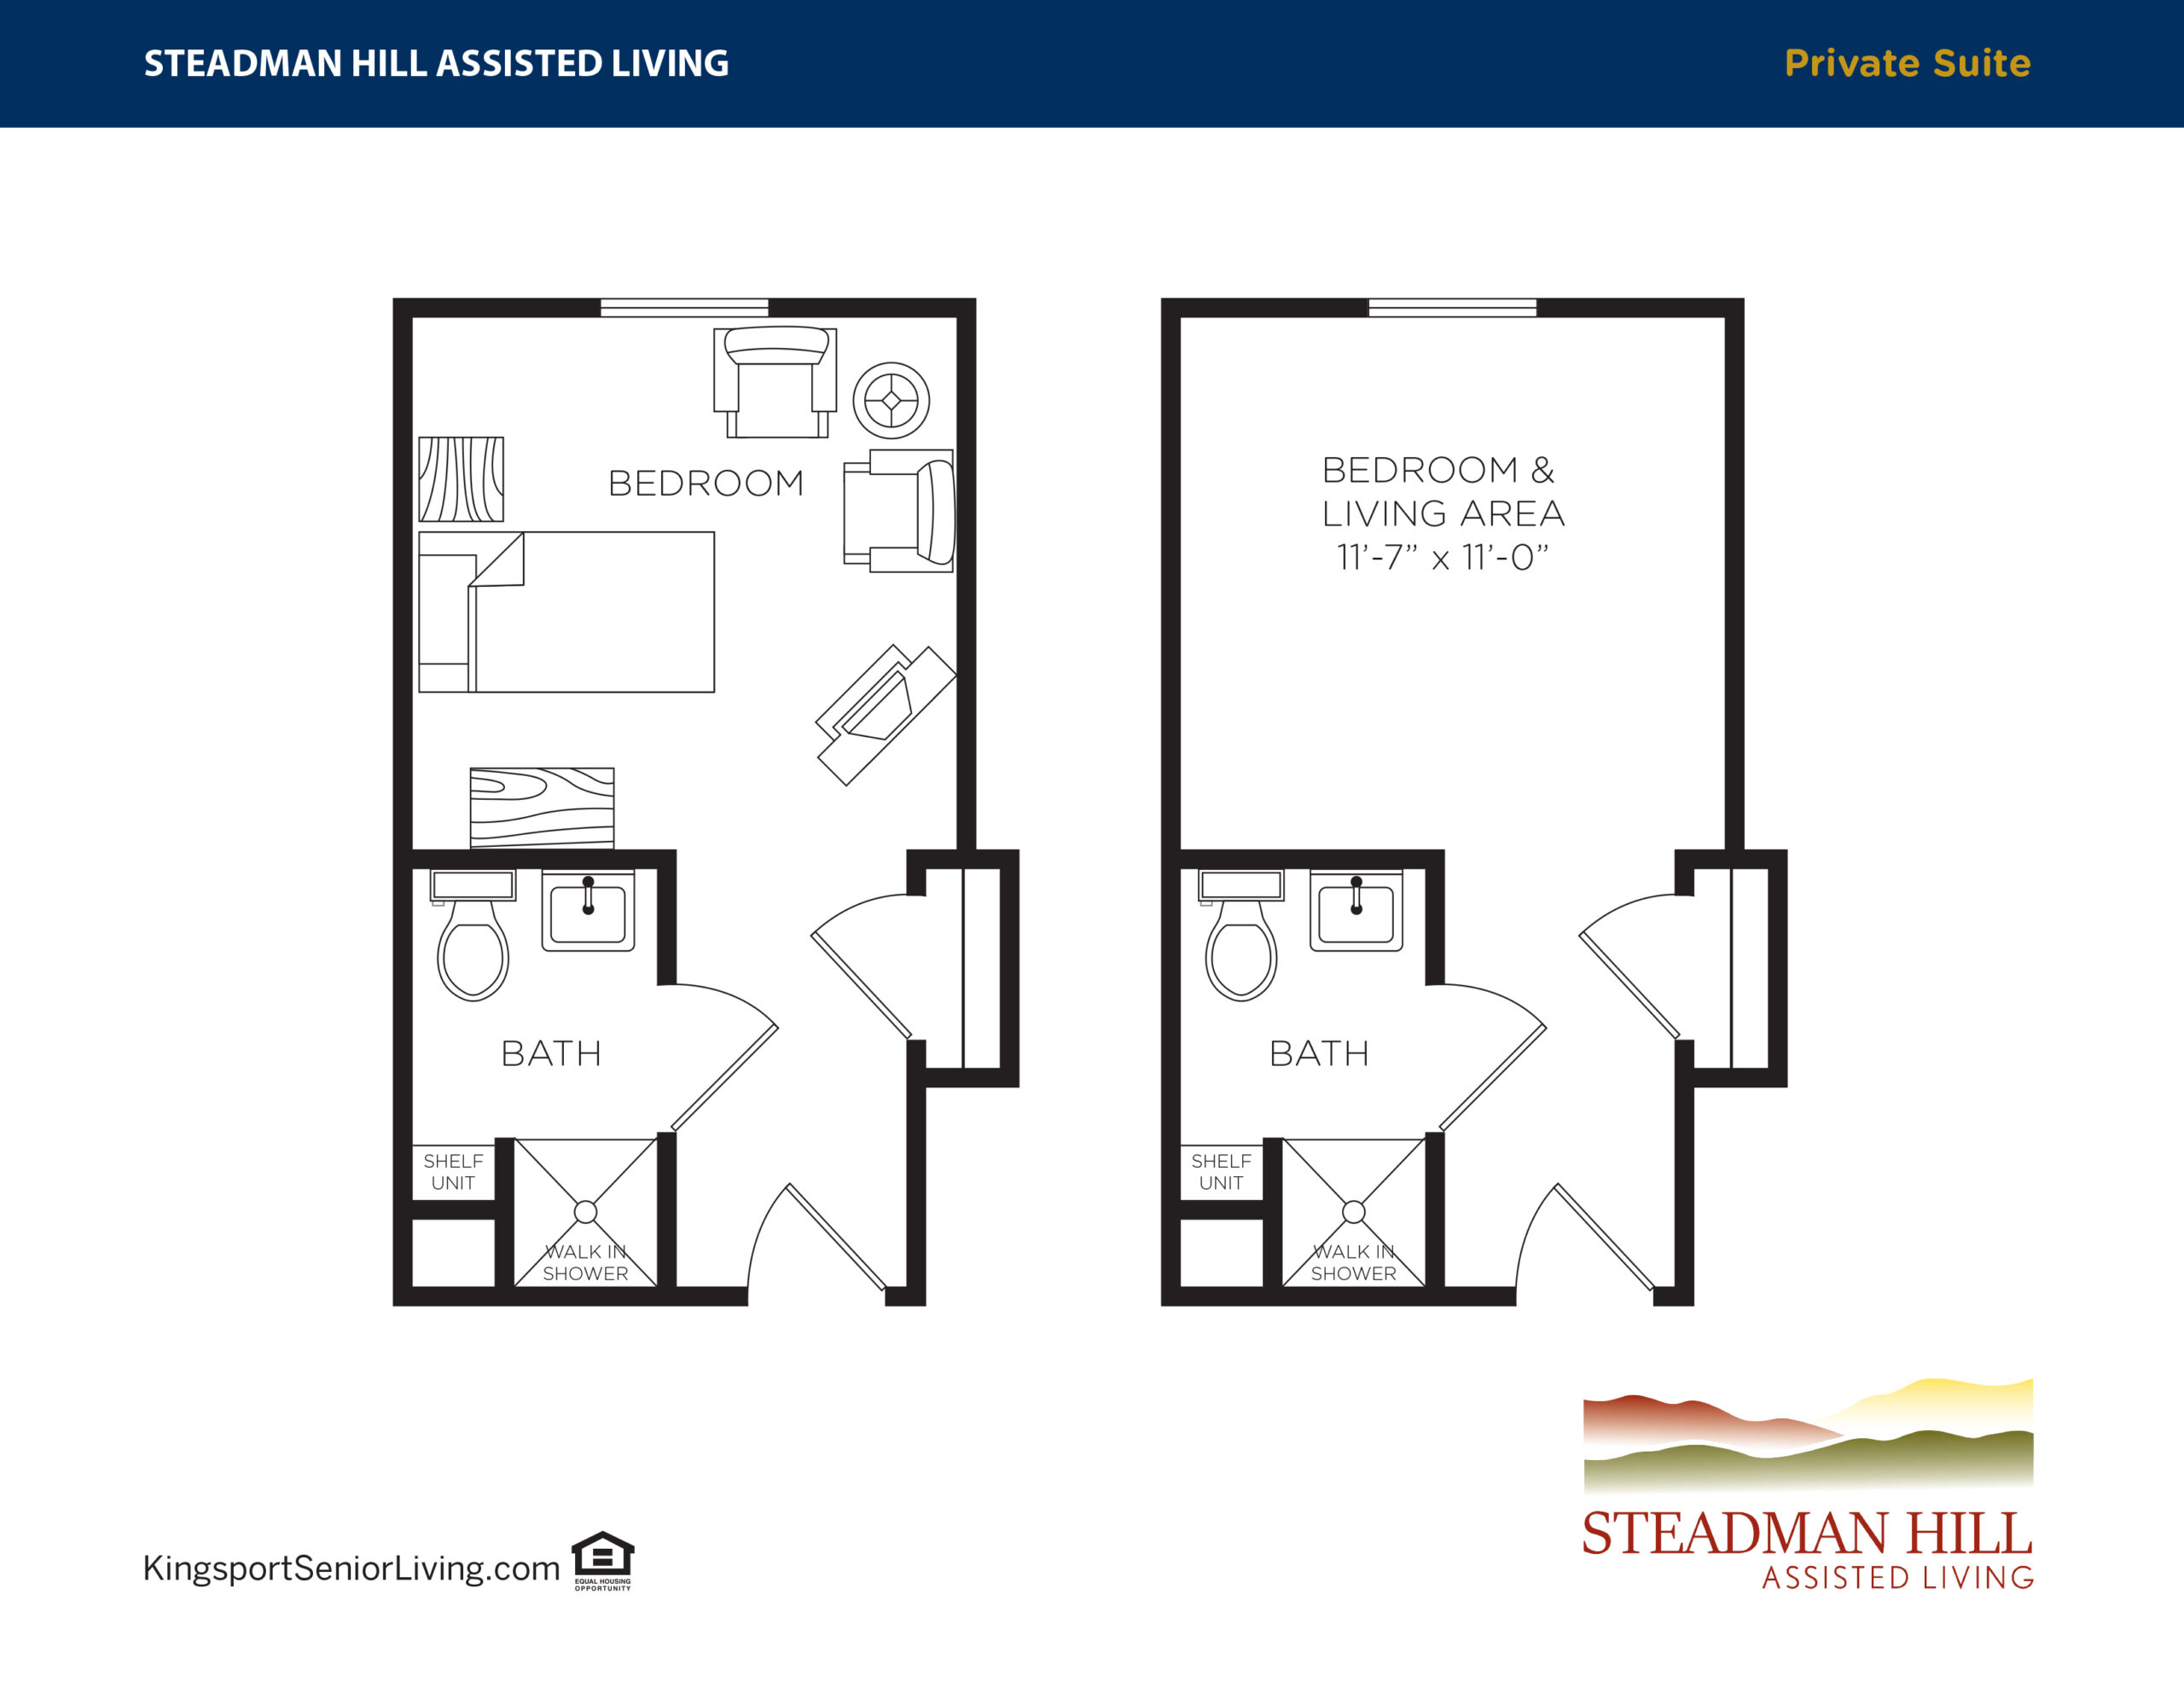 Steadman Hill Floorplan Private